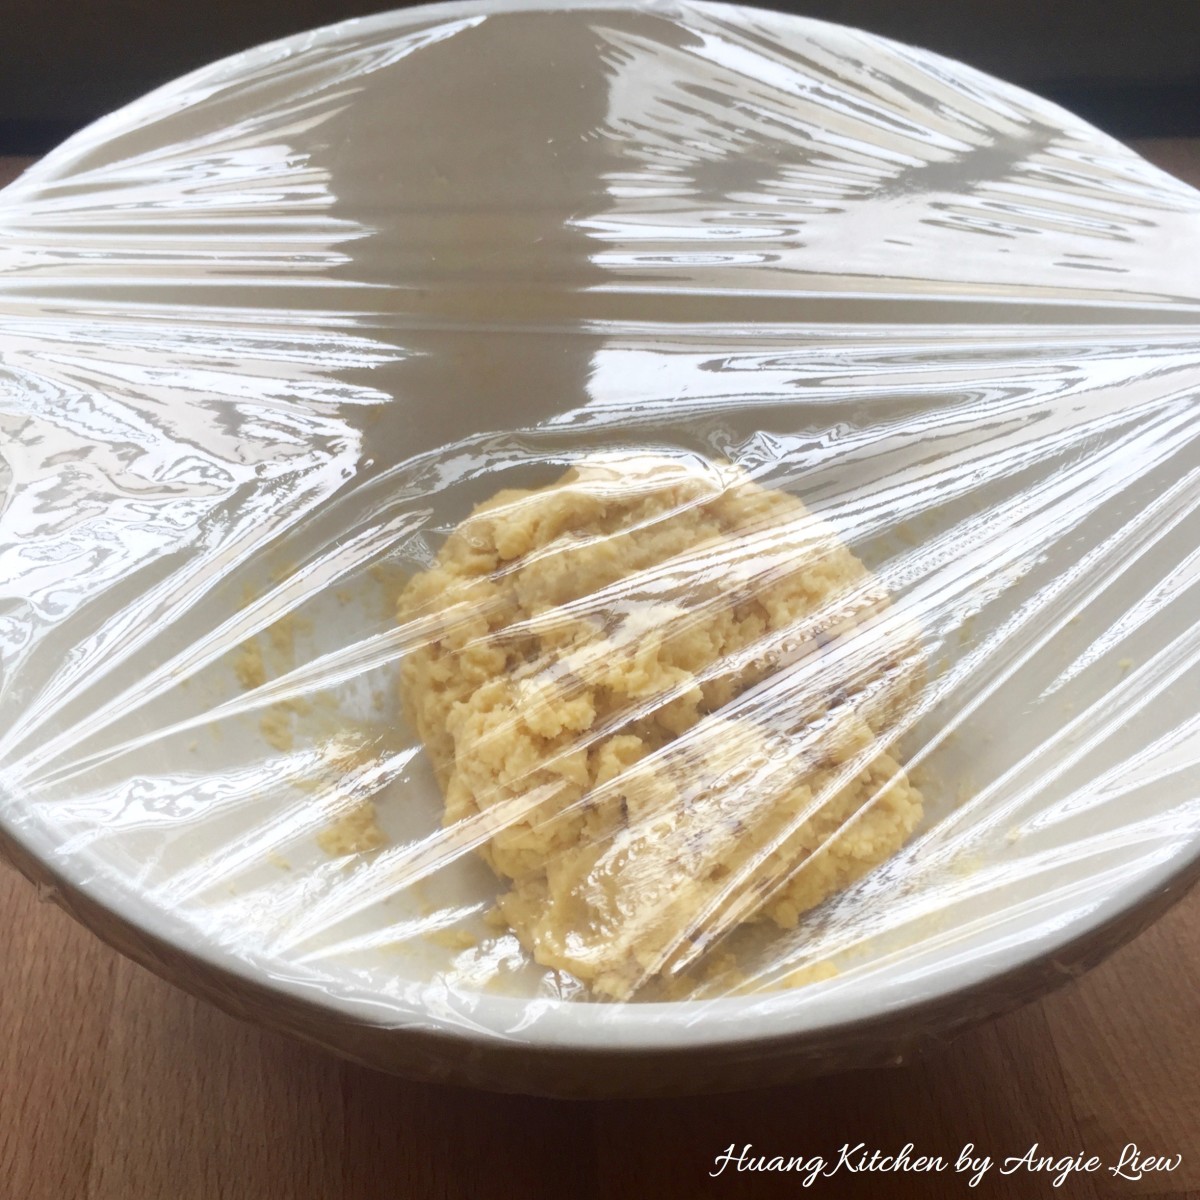 Rose Pineapple Tarts Recipe - refrigerate